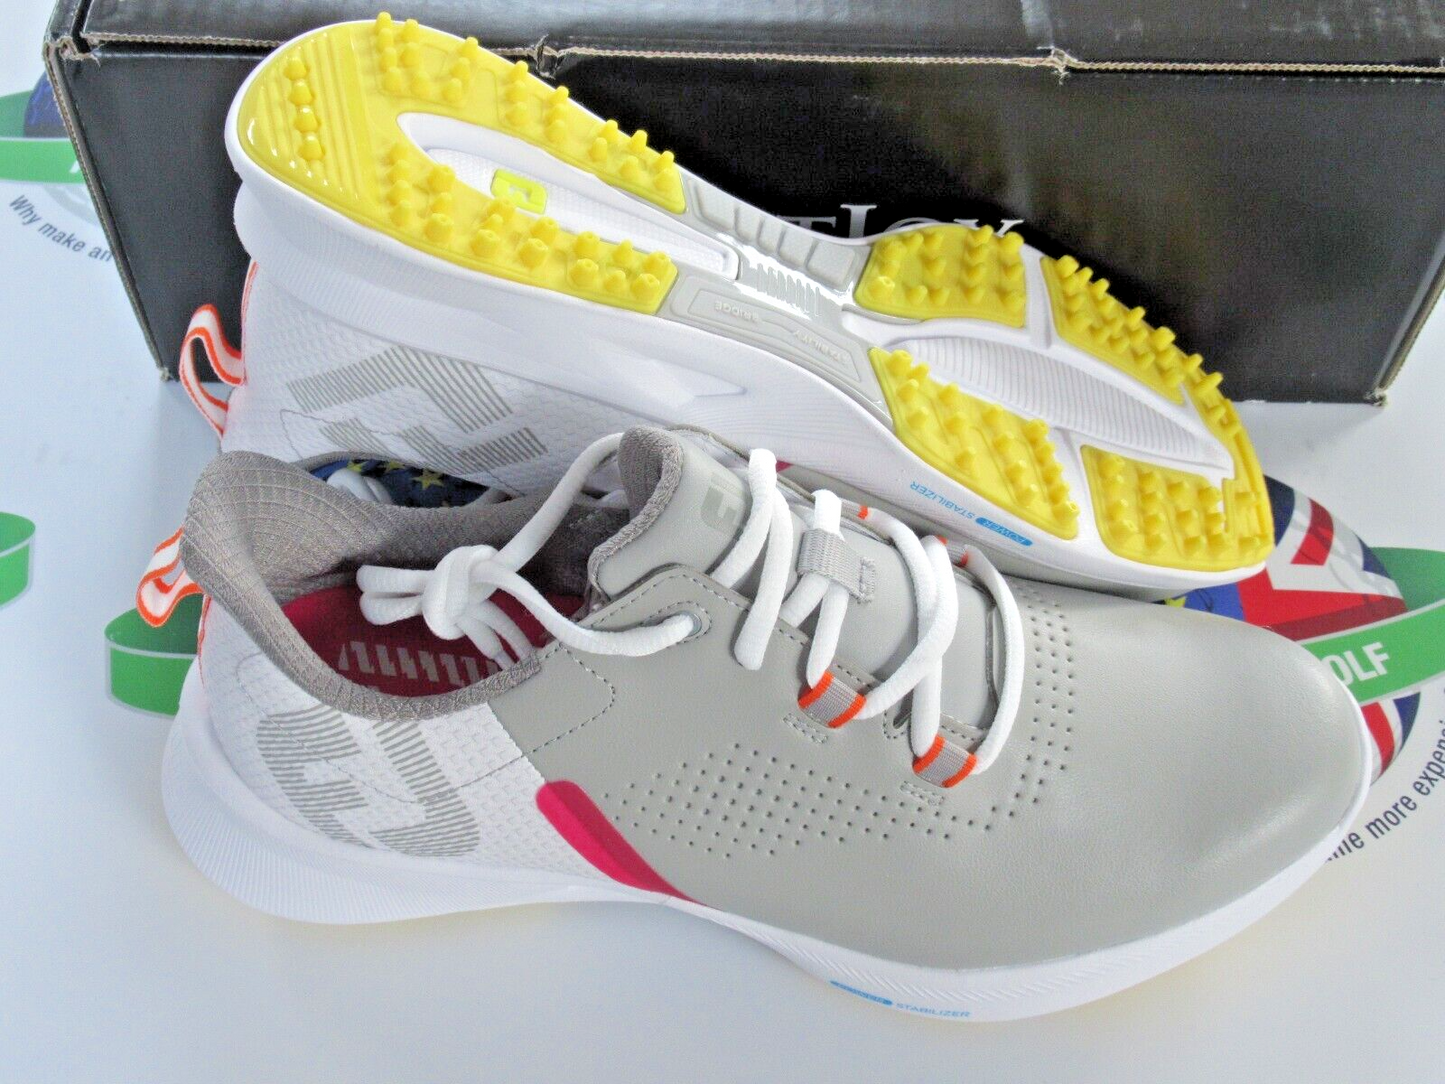 footjoy fuel womens golf shoes grey/white 92372k uk size 6.5 medium